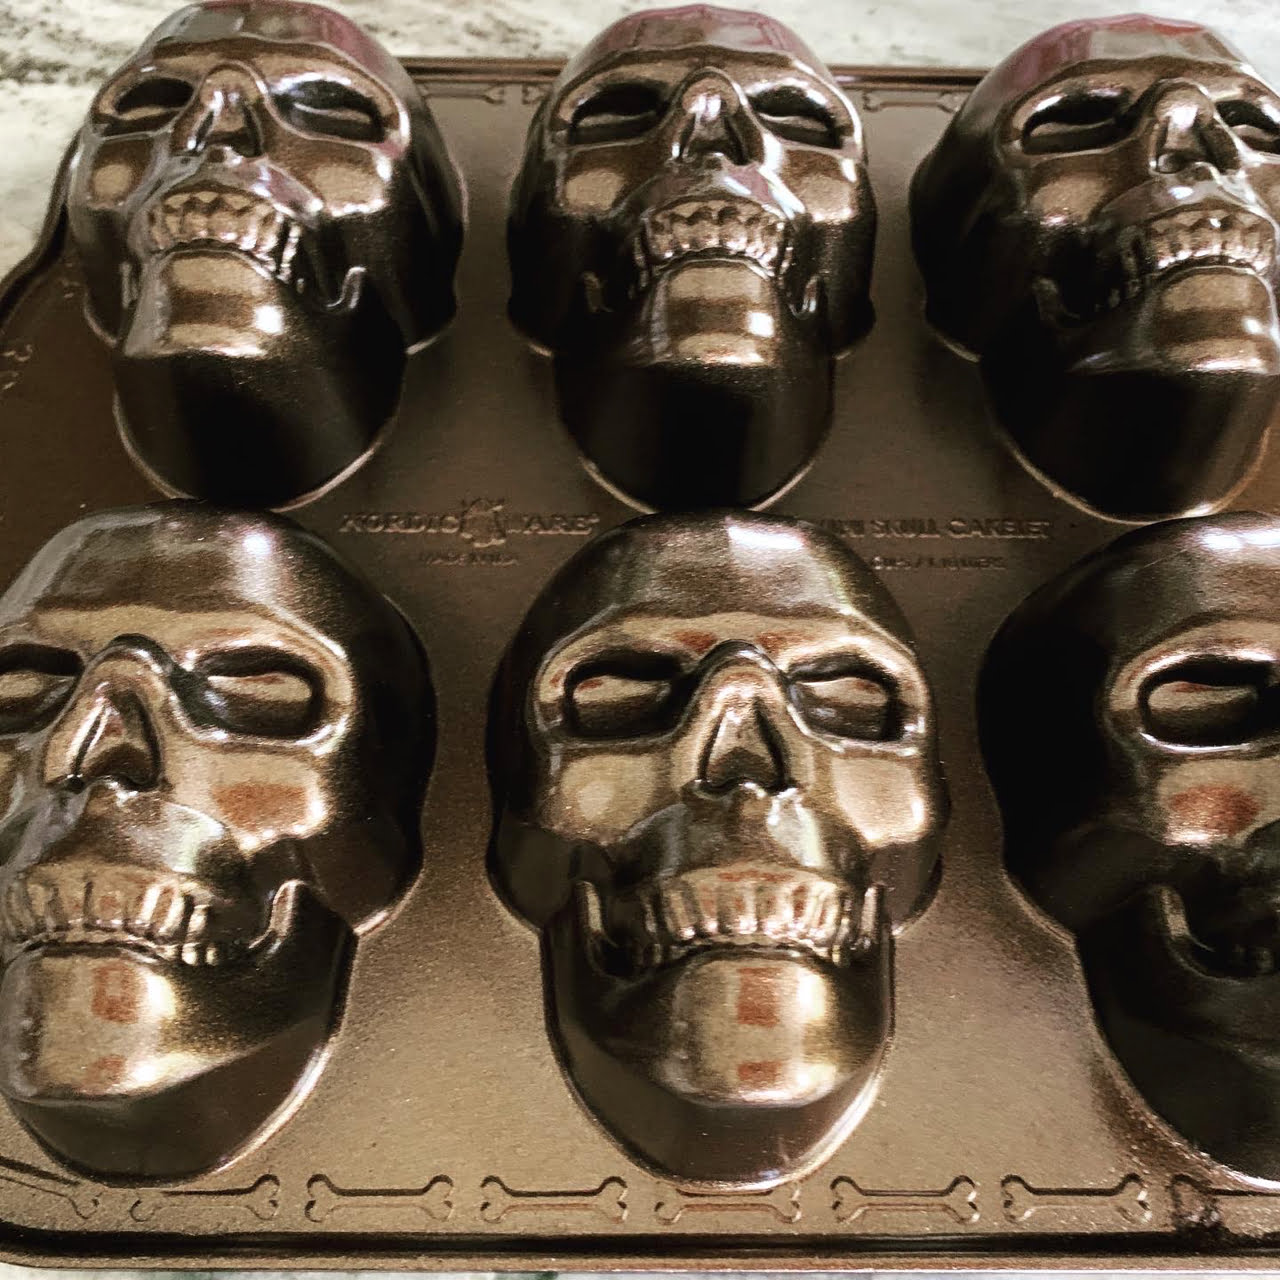 Cool Skull Baking Pans